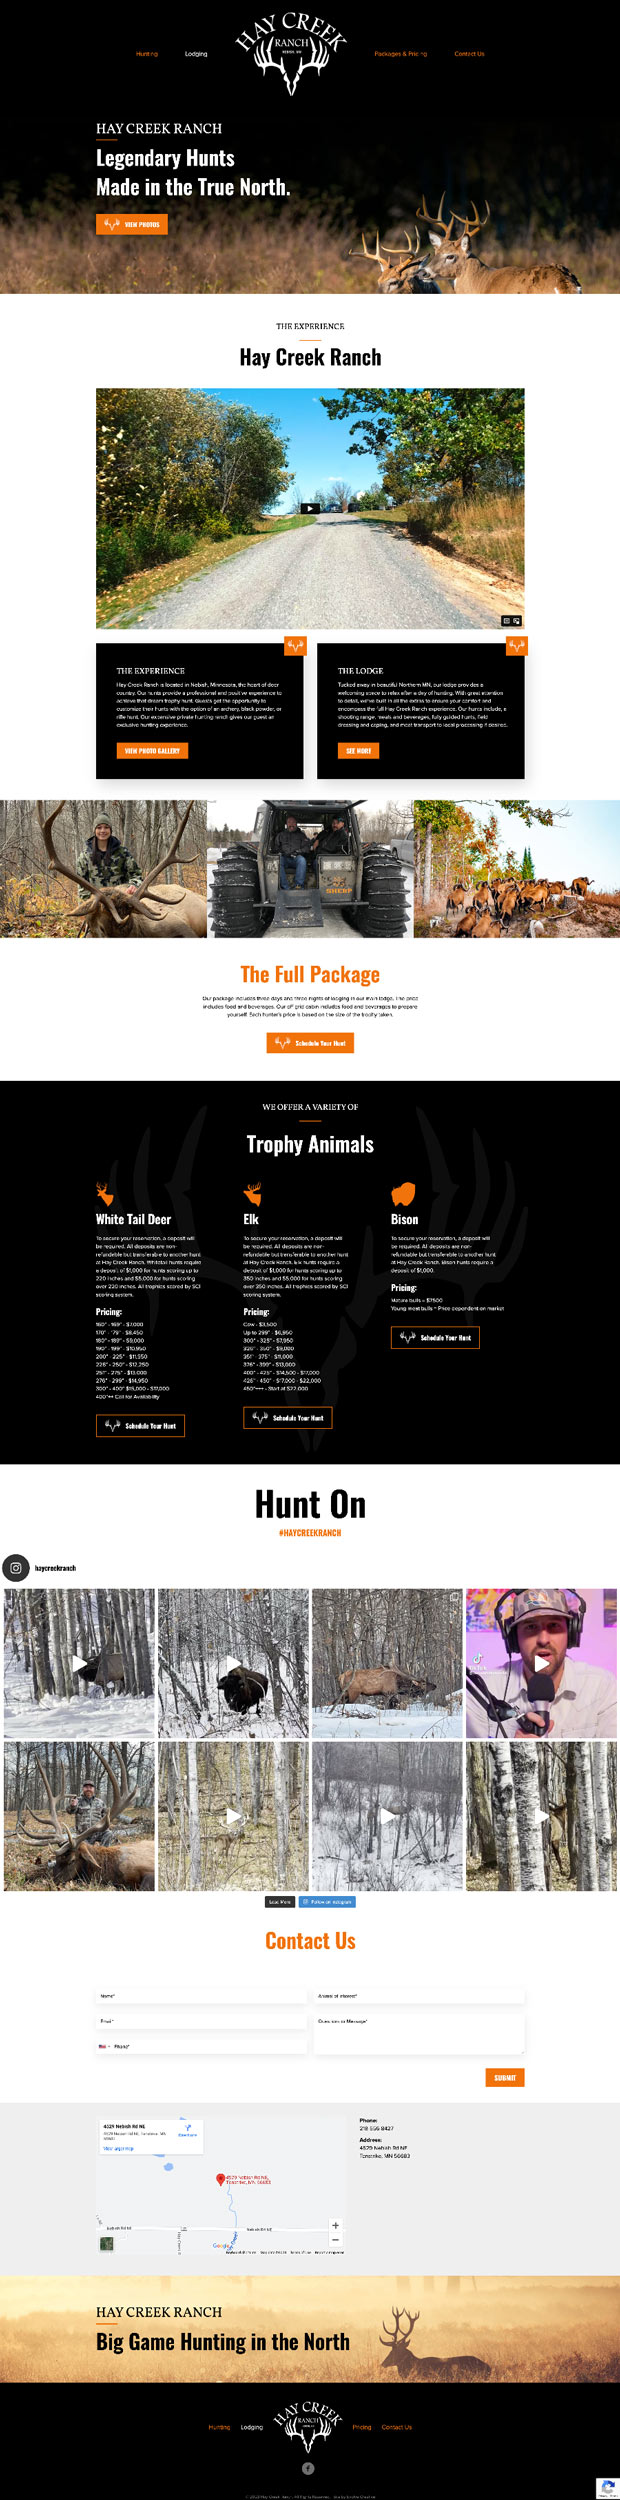 haycreek ranch hunting website design